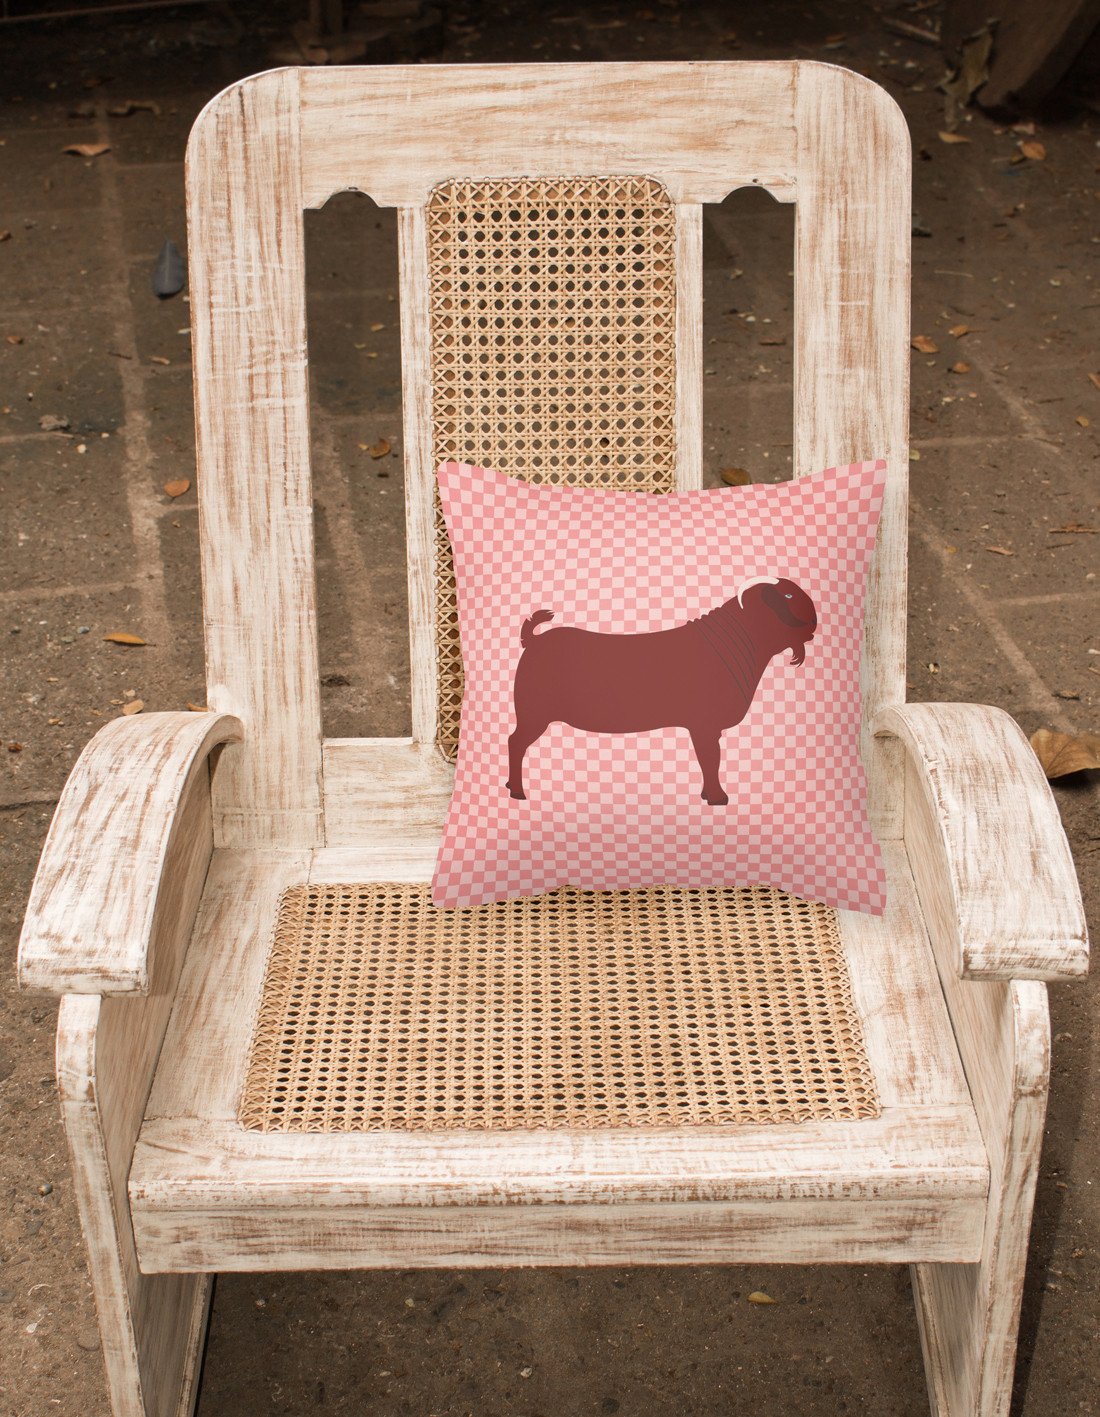 Kalahari Red Goat Pink Check Fabric Decorative Pillow BB7891PW1818 by Caroline's Treasures